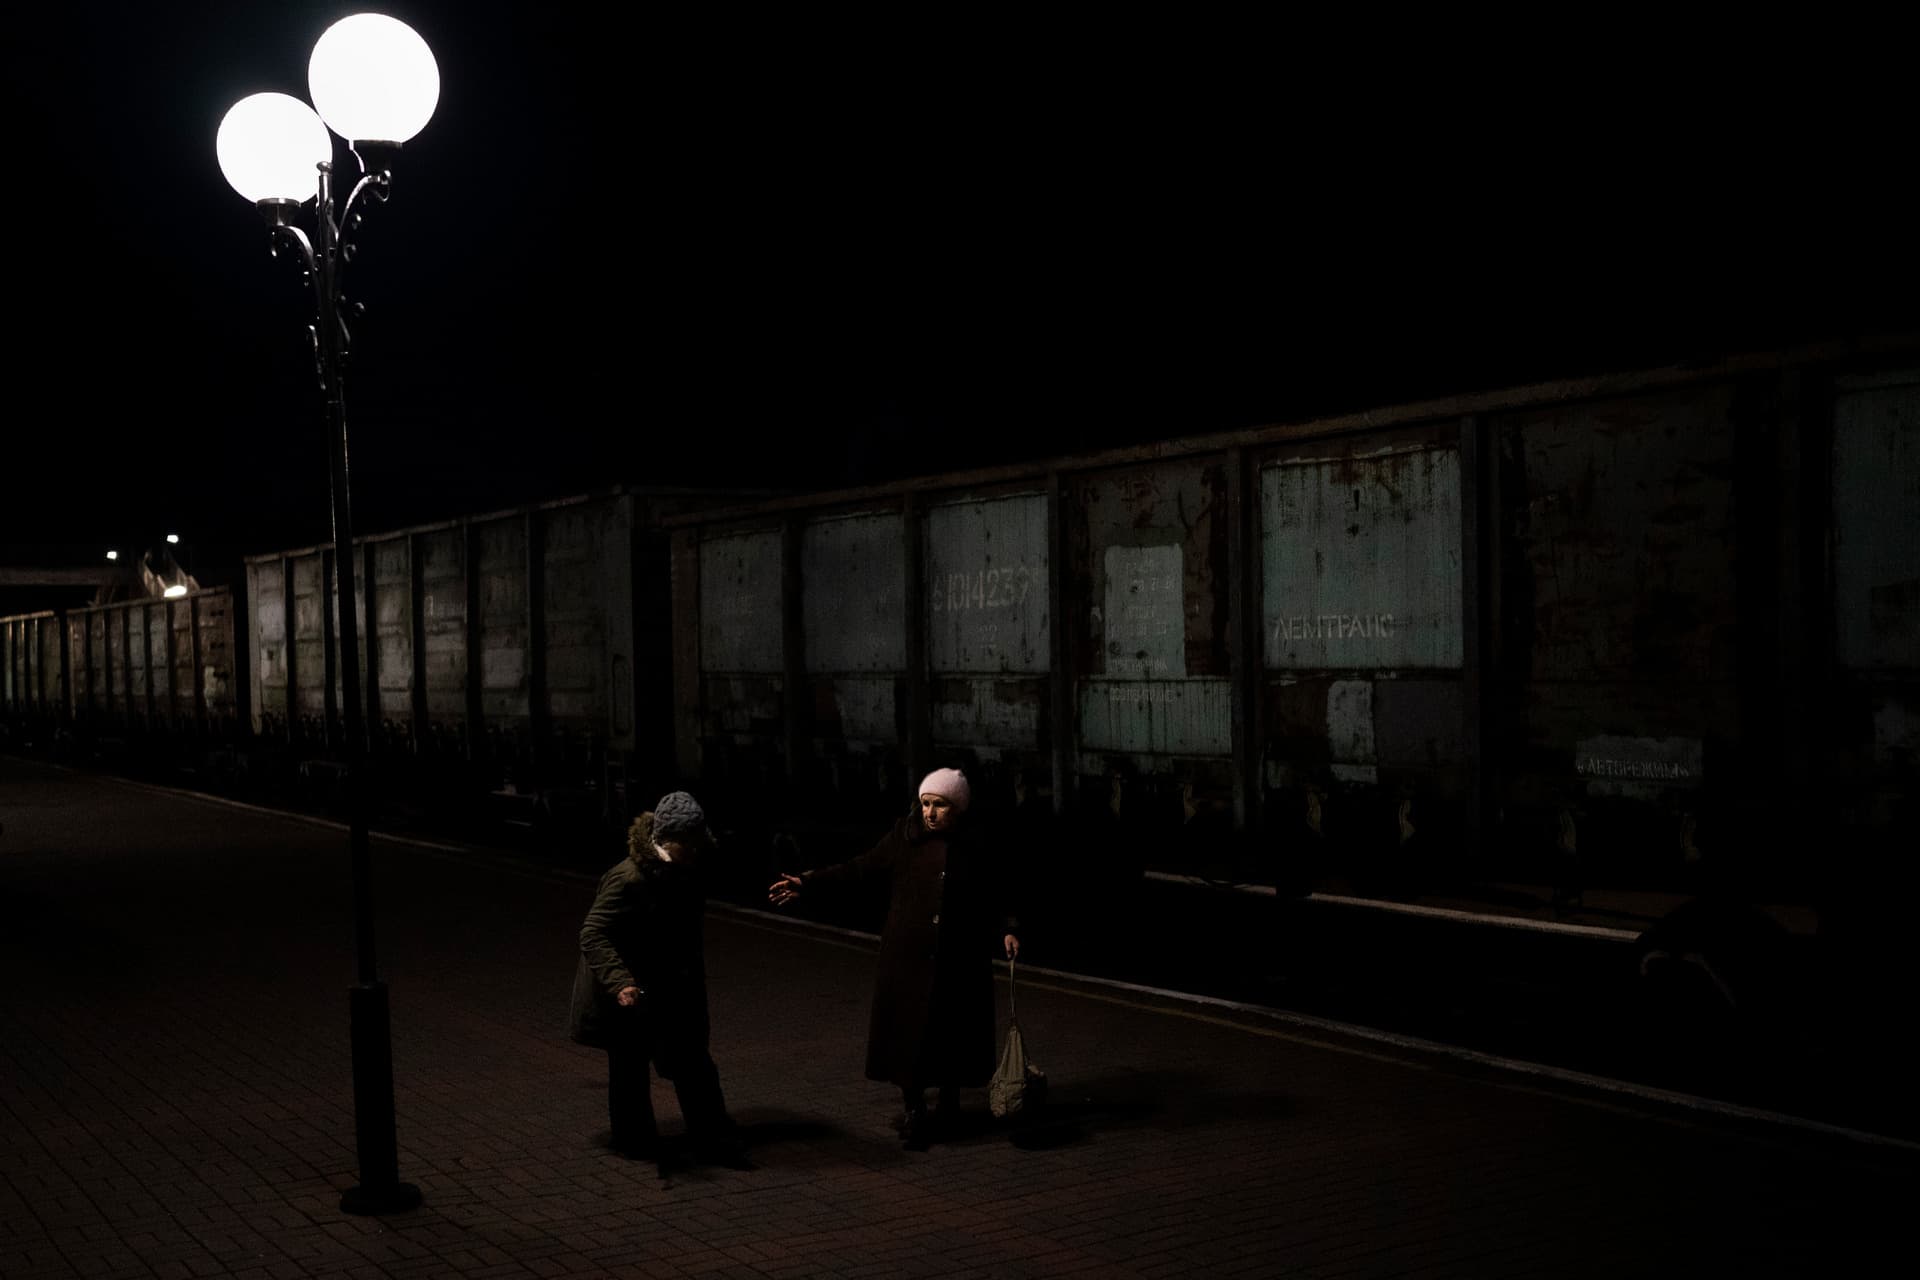 Two elderly Ukrainian women walk towards the Kherson-Kyiv train at the Kherson railway station